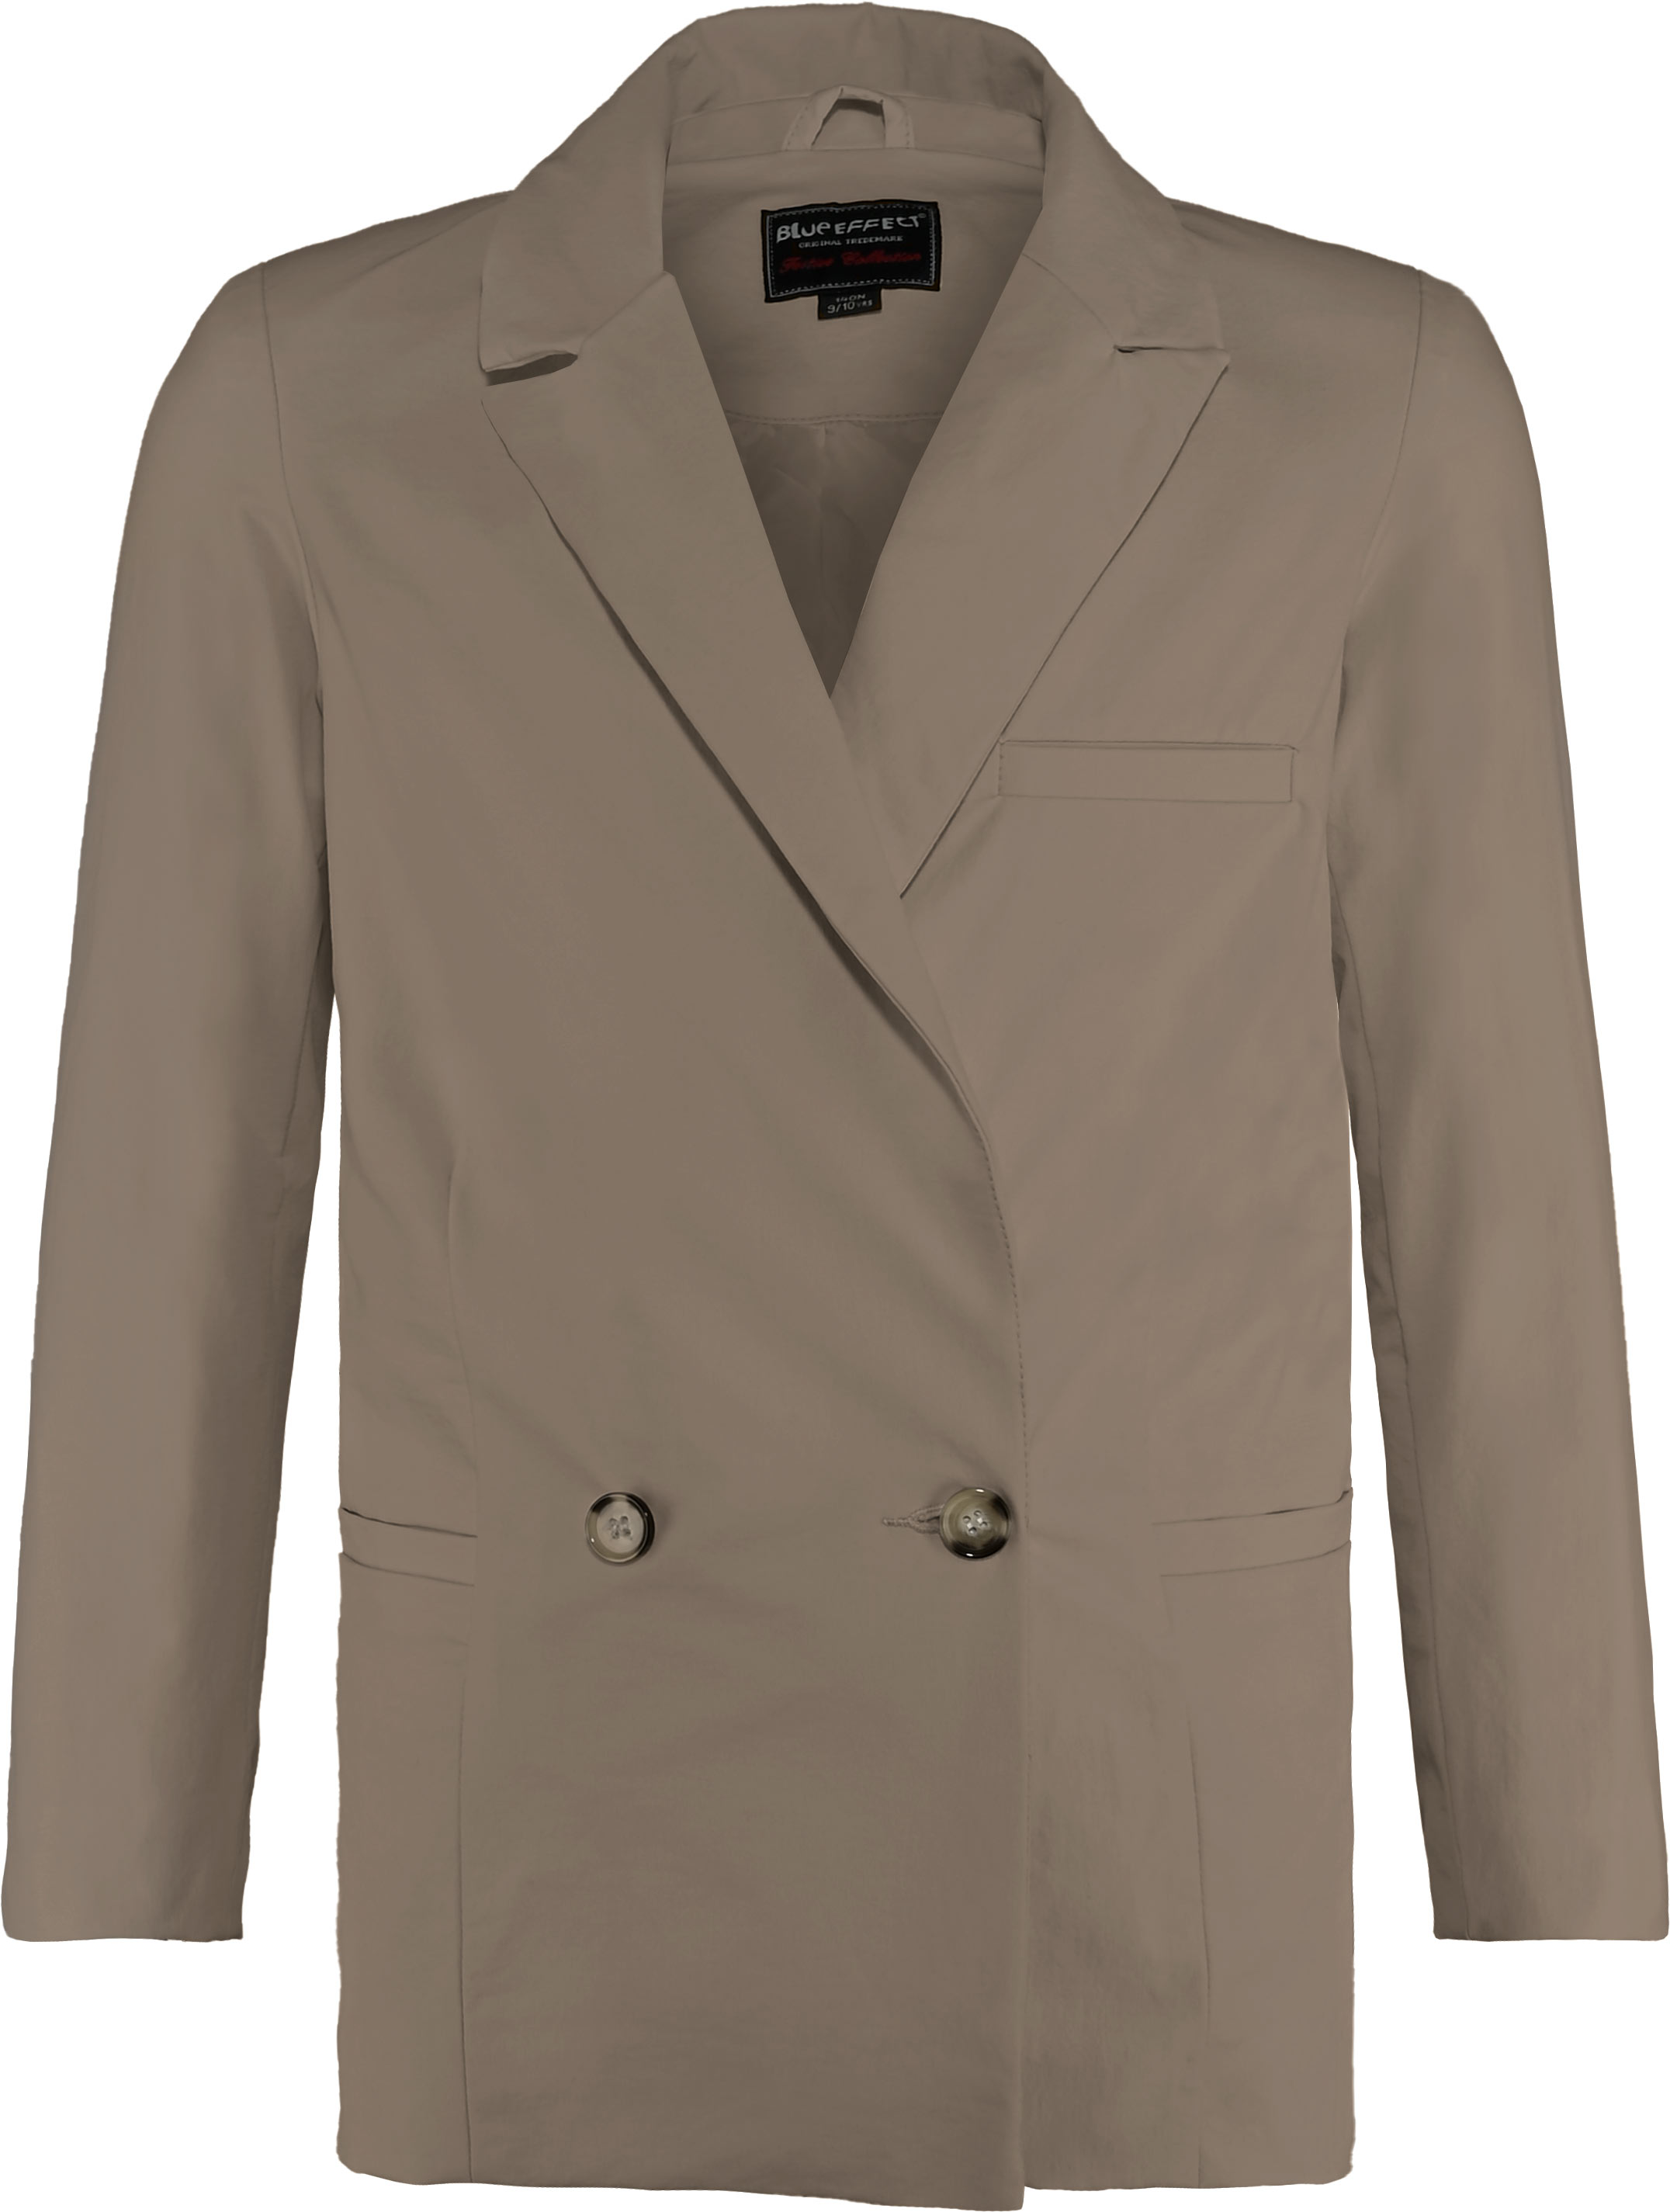 8190-Girls Blazer Jacket Oversized